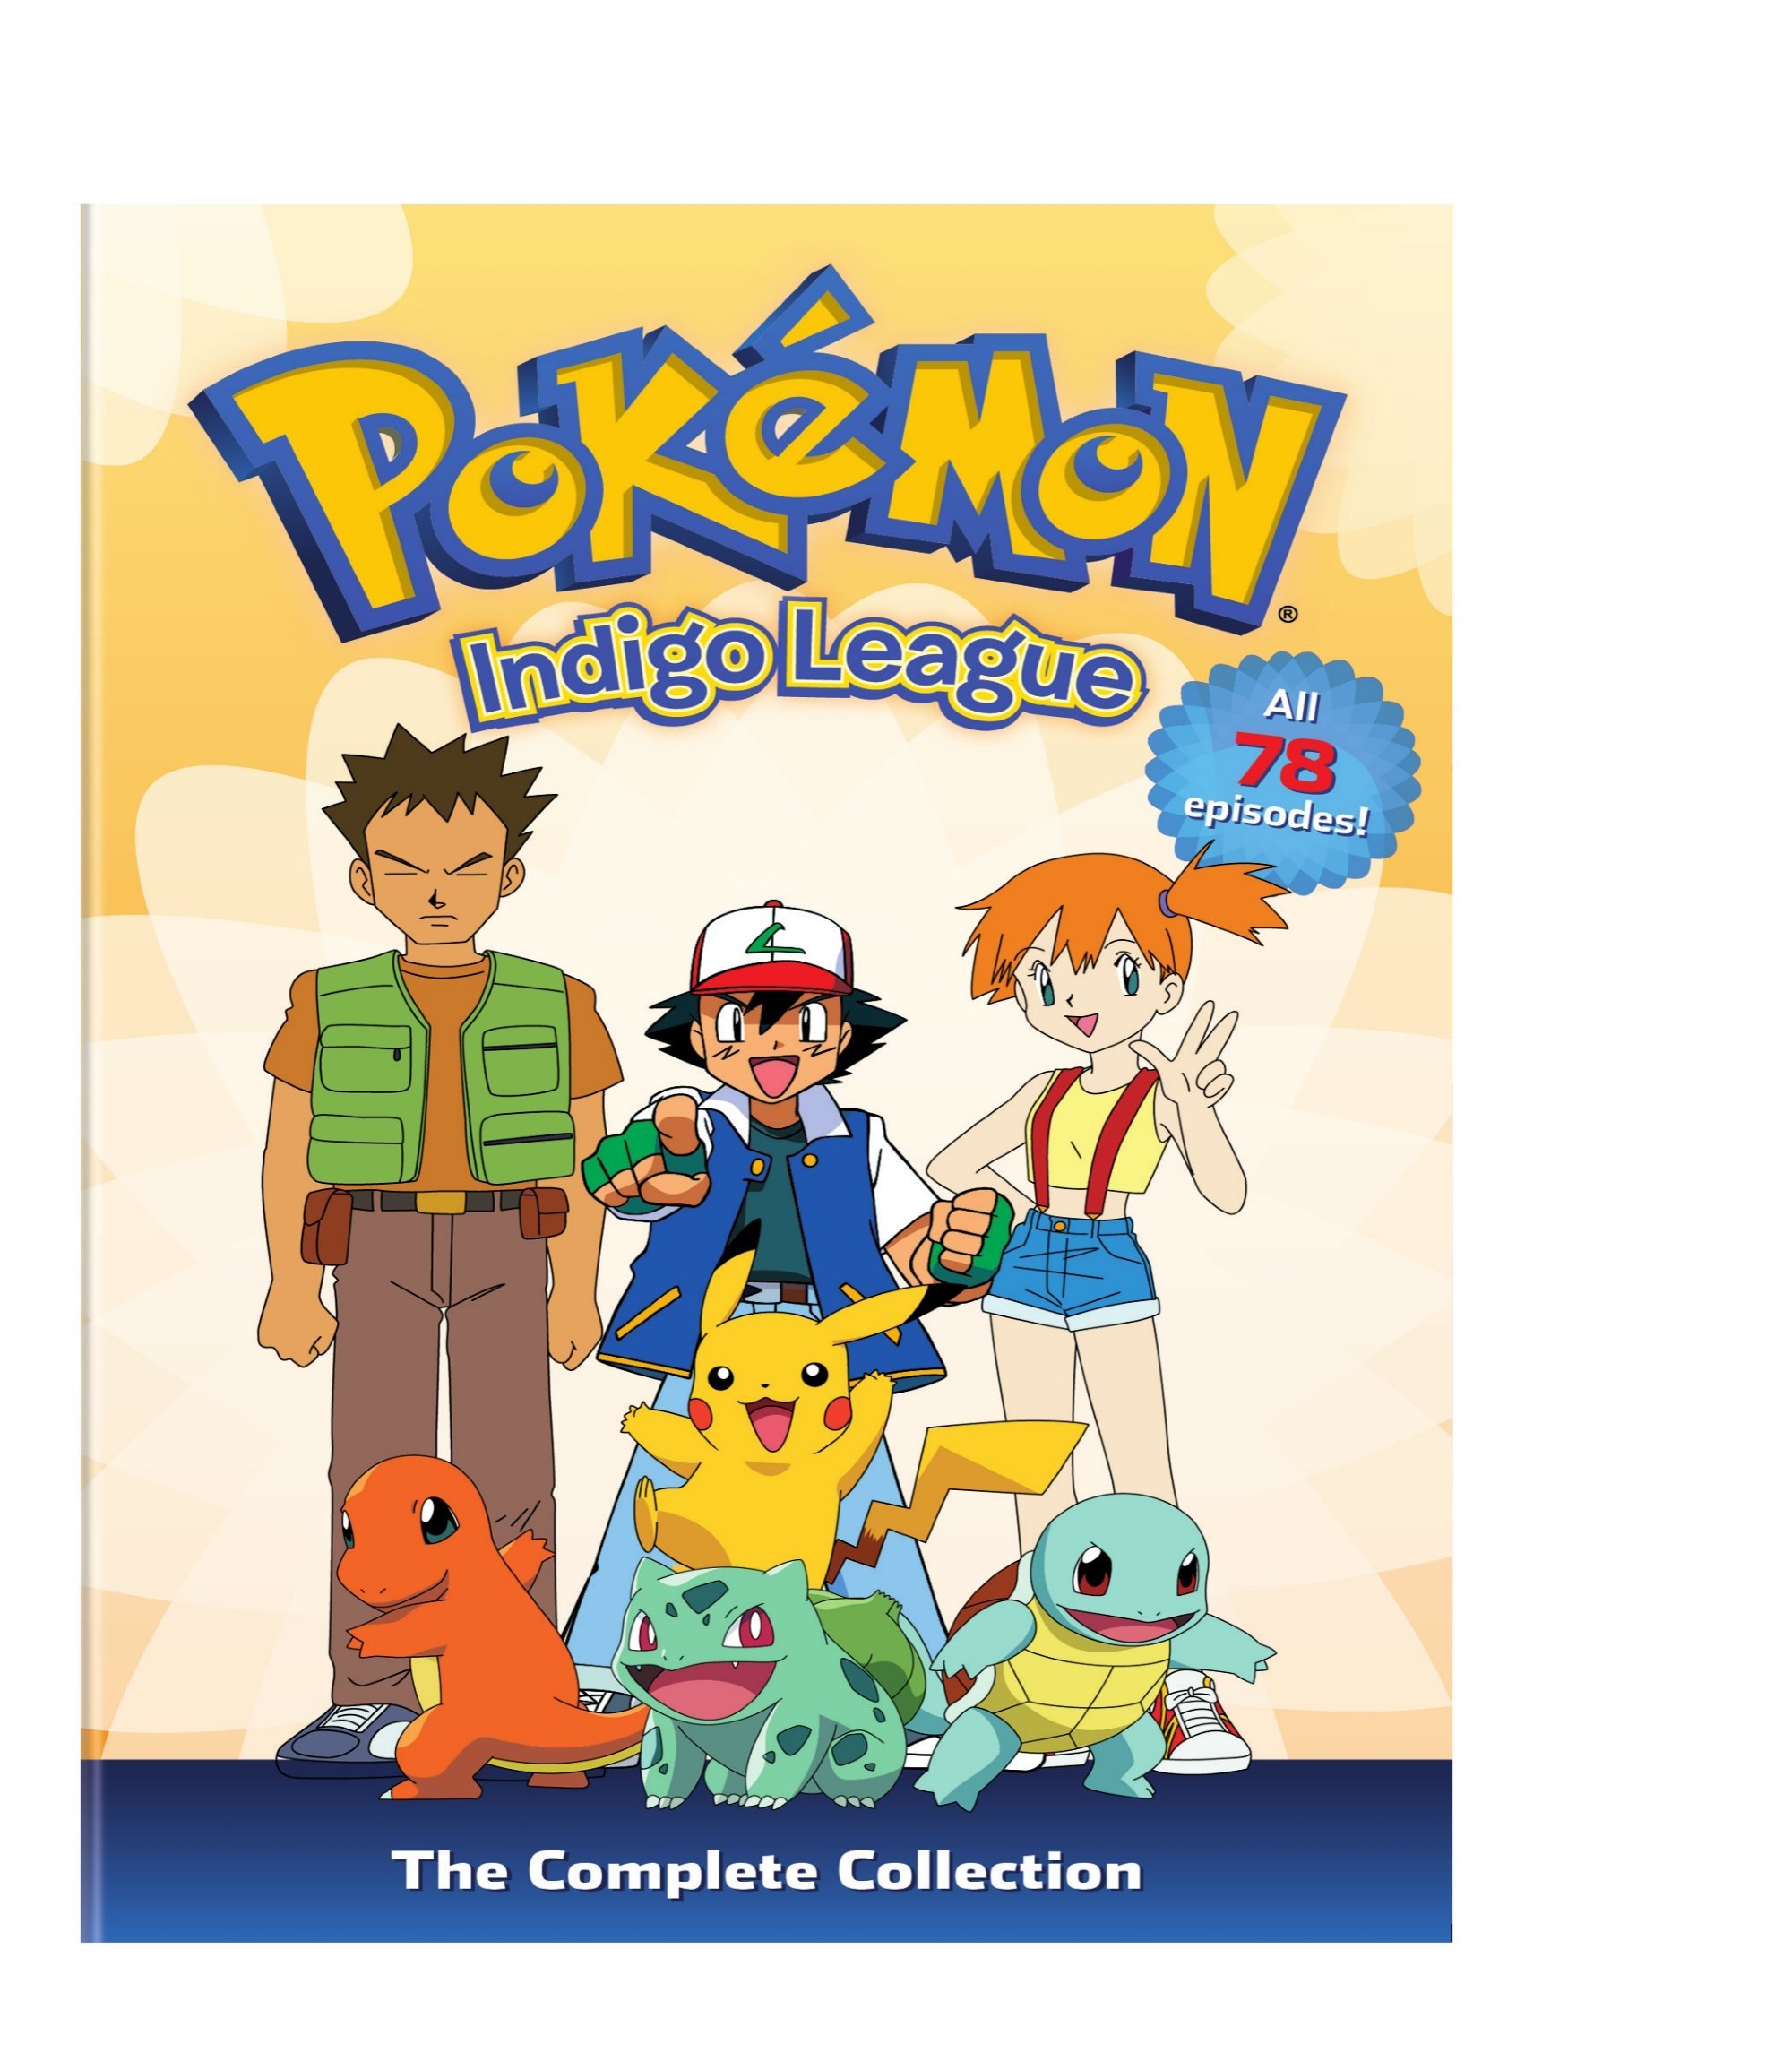 Pokemon Season 1: Indigo League – The Complete Collection on MovieShack